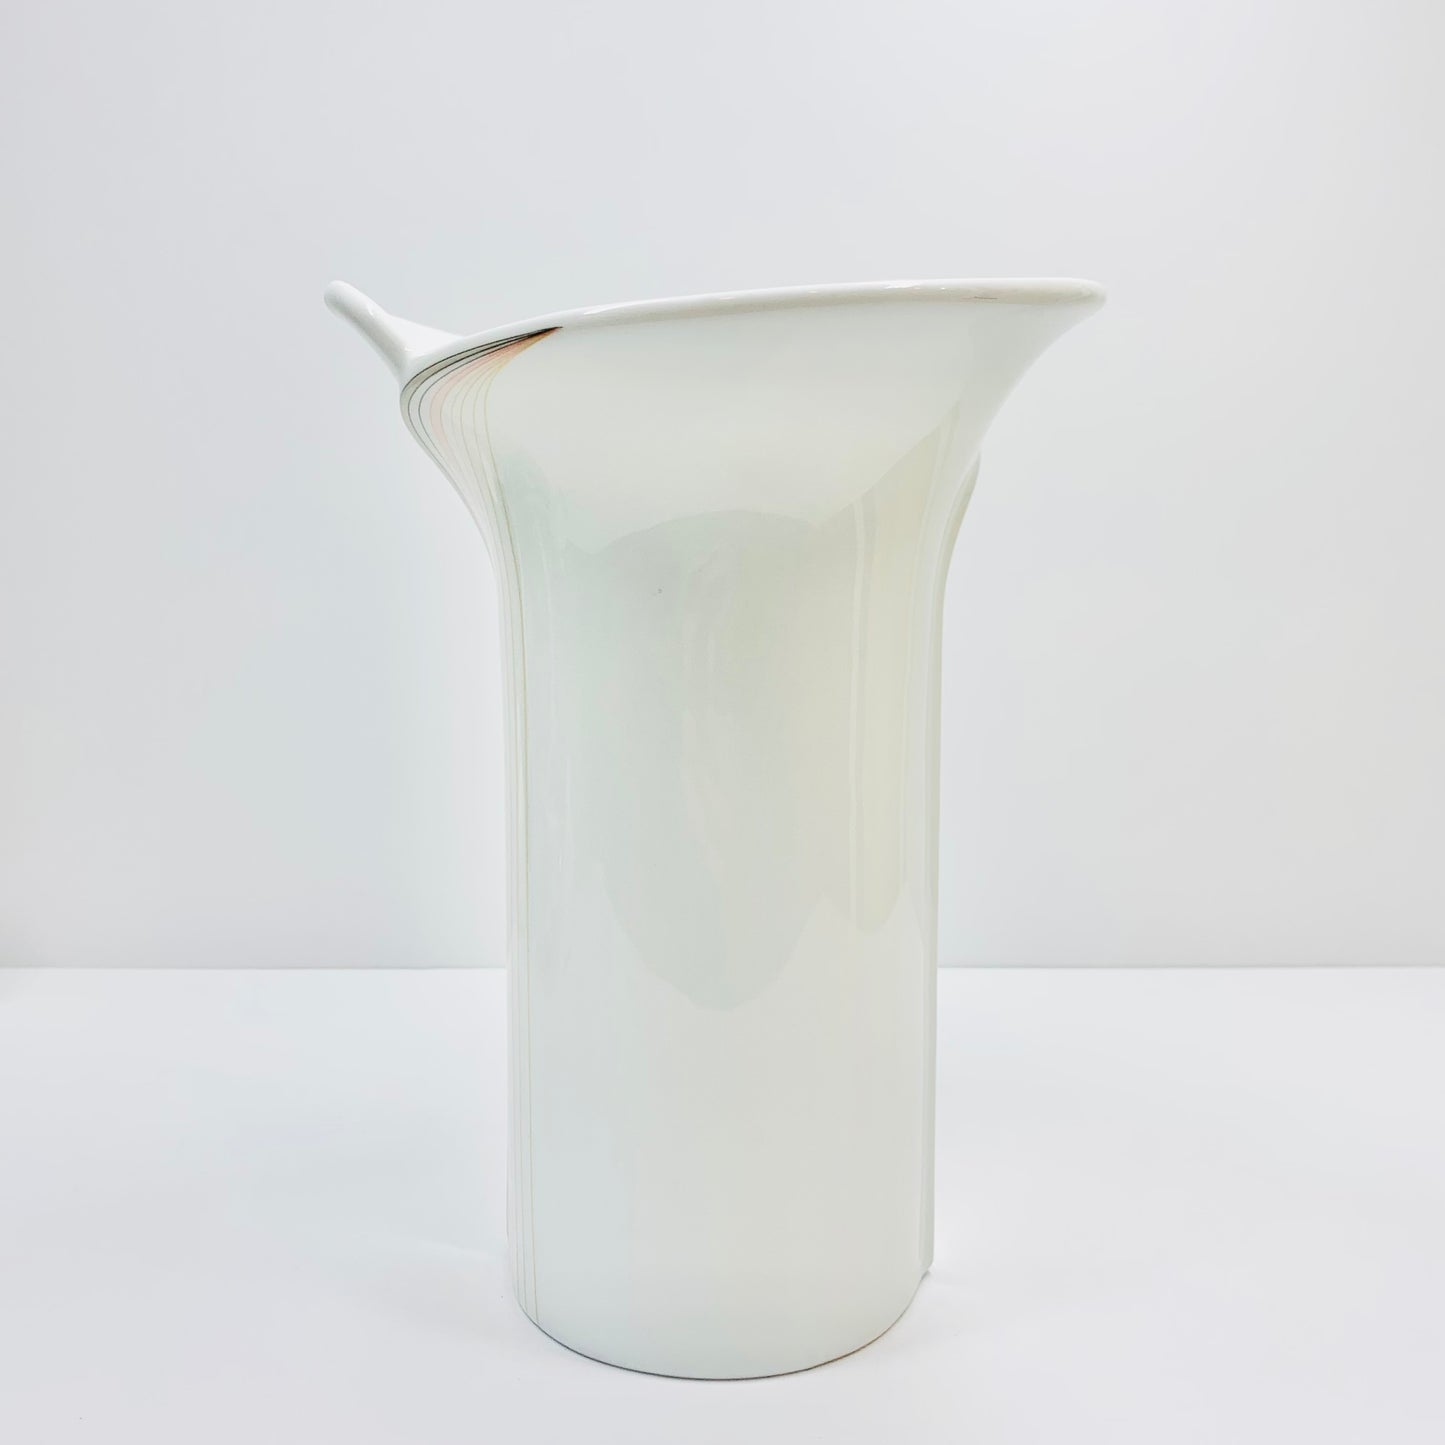 Vintage Japanese Porcelain Vase with Drape Neck